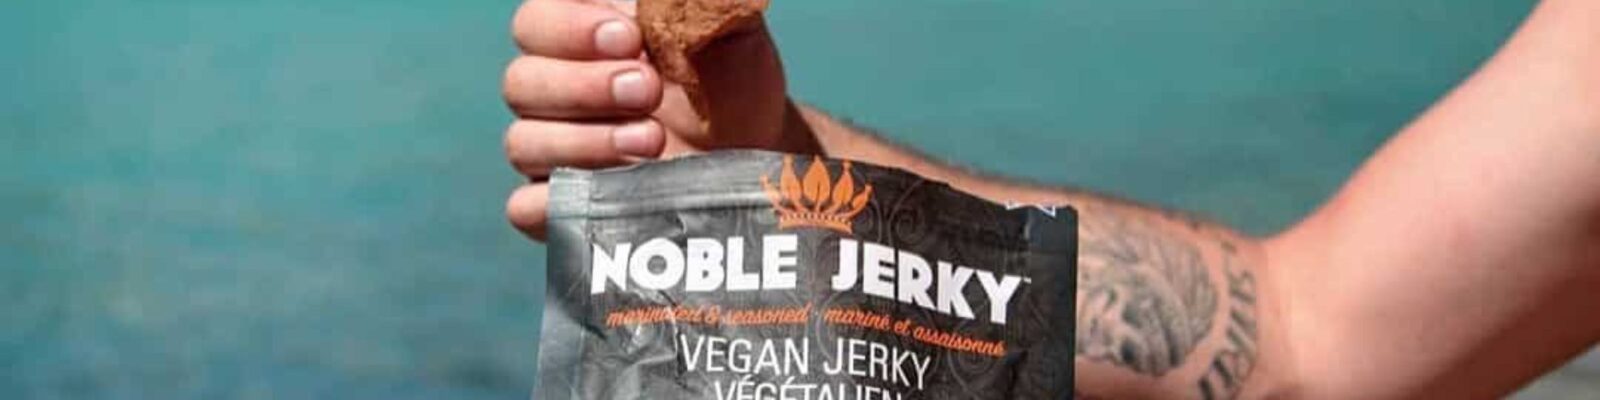 noble vegan jerky review